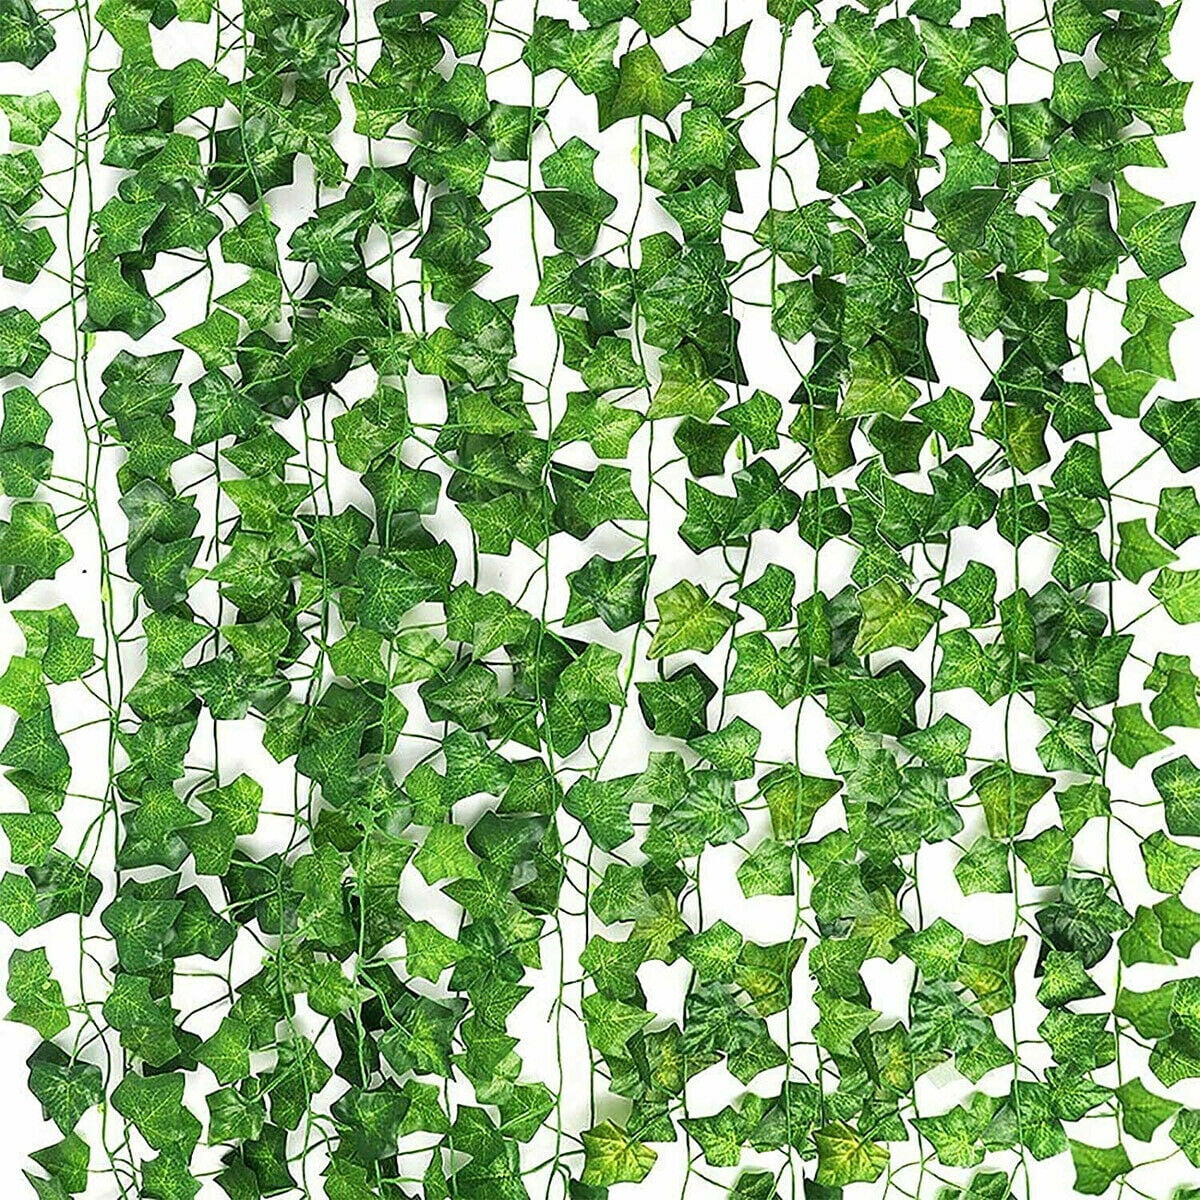 12 PCS Artificial Ivy Leaf Plants Vine Hanging Garland Fake Foliage Home Decor 